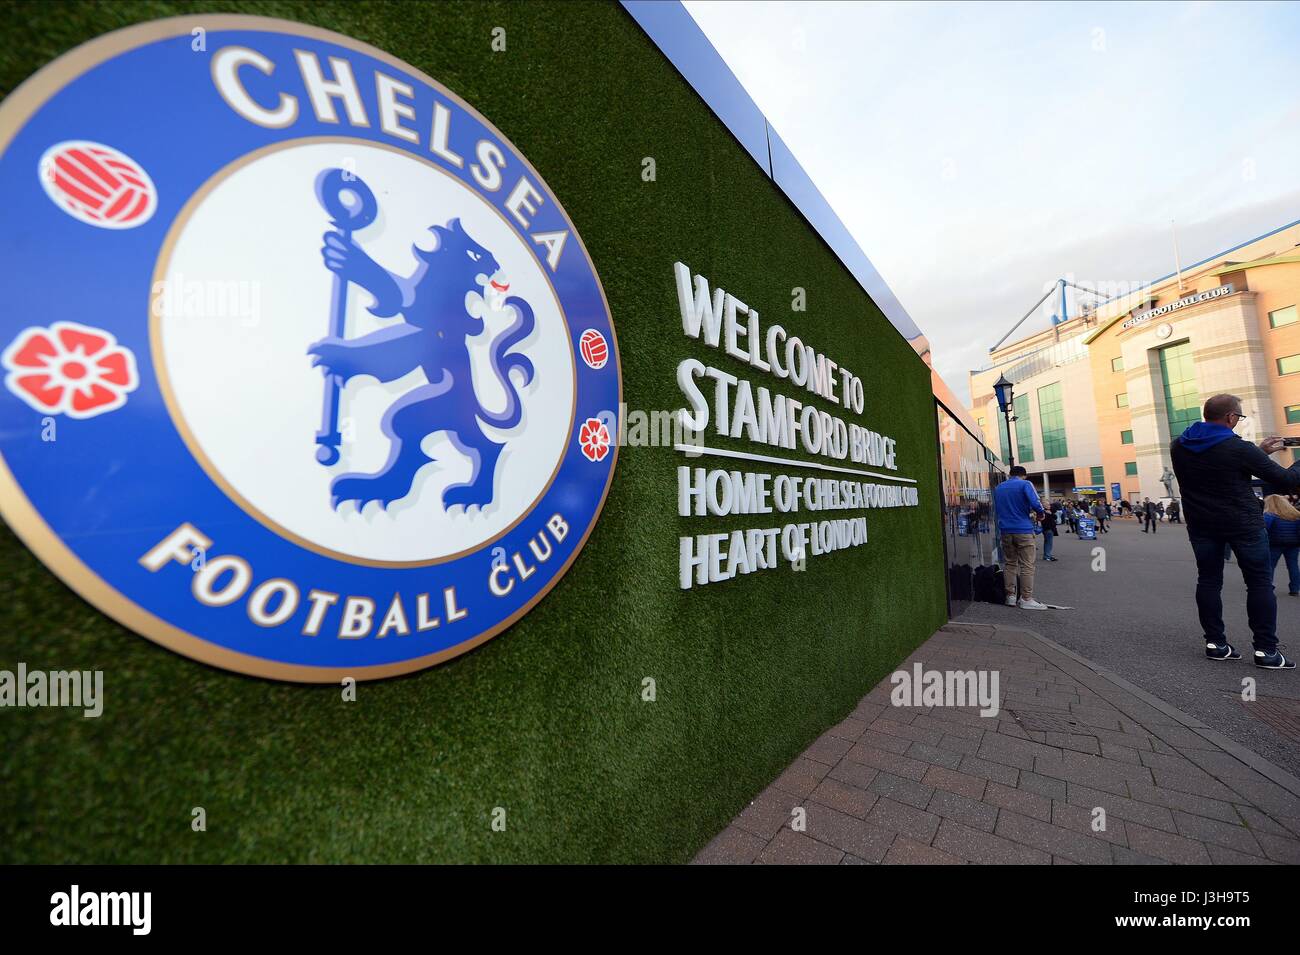 Stamford Bridge Stadium in London: 13 reviews and 88 photos